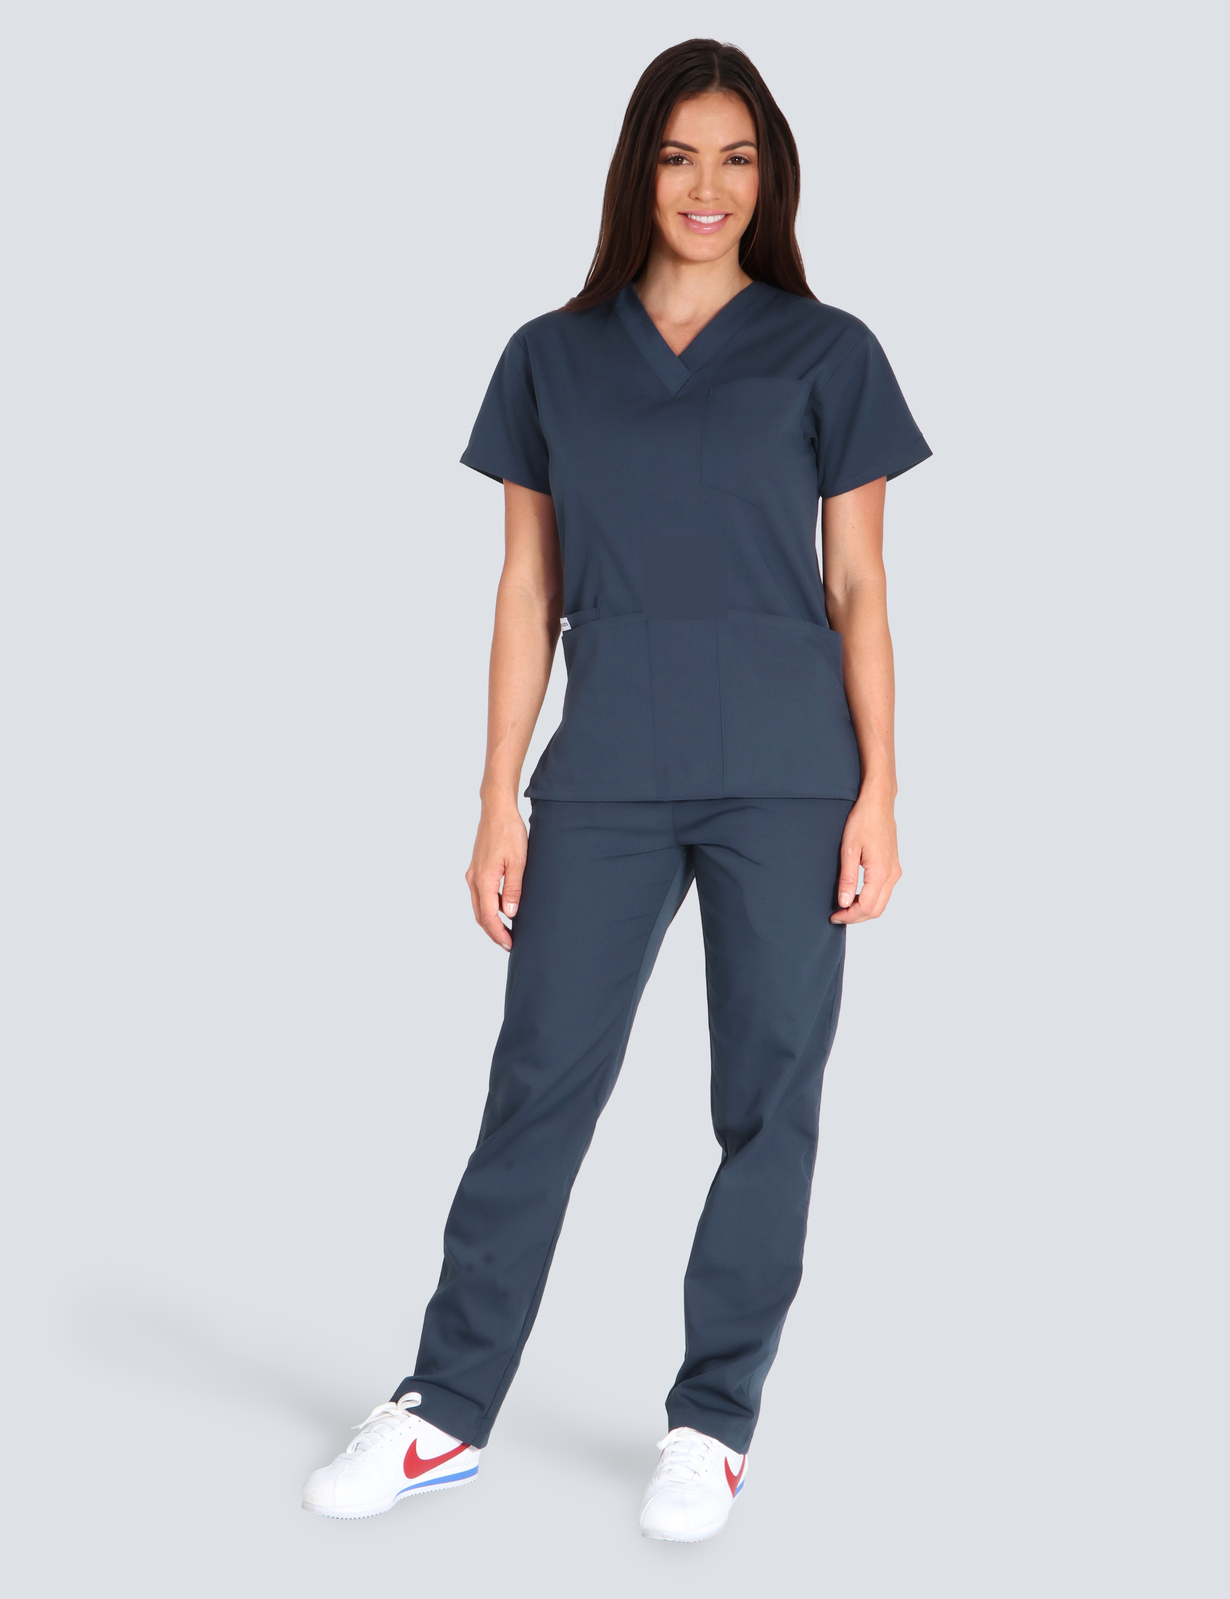 St Vincent's Hospital Cardiac Physiologist Uniform Set Bundle  (4 Pocket Top and Regular Pants in Navy incl Logo)